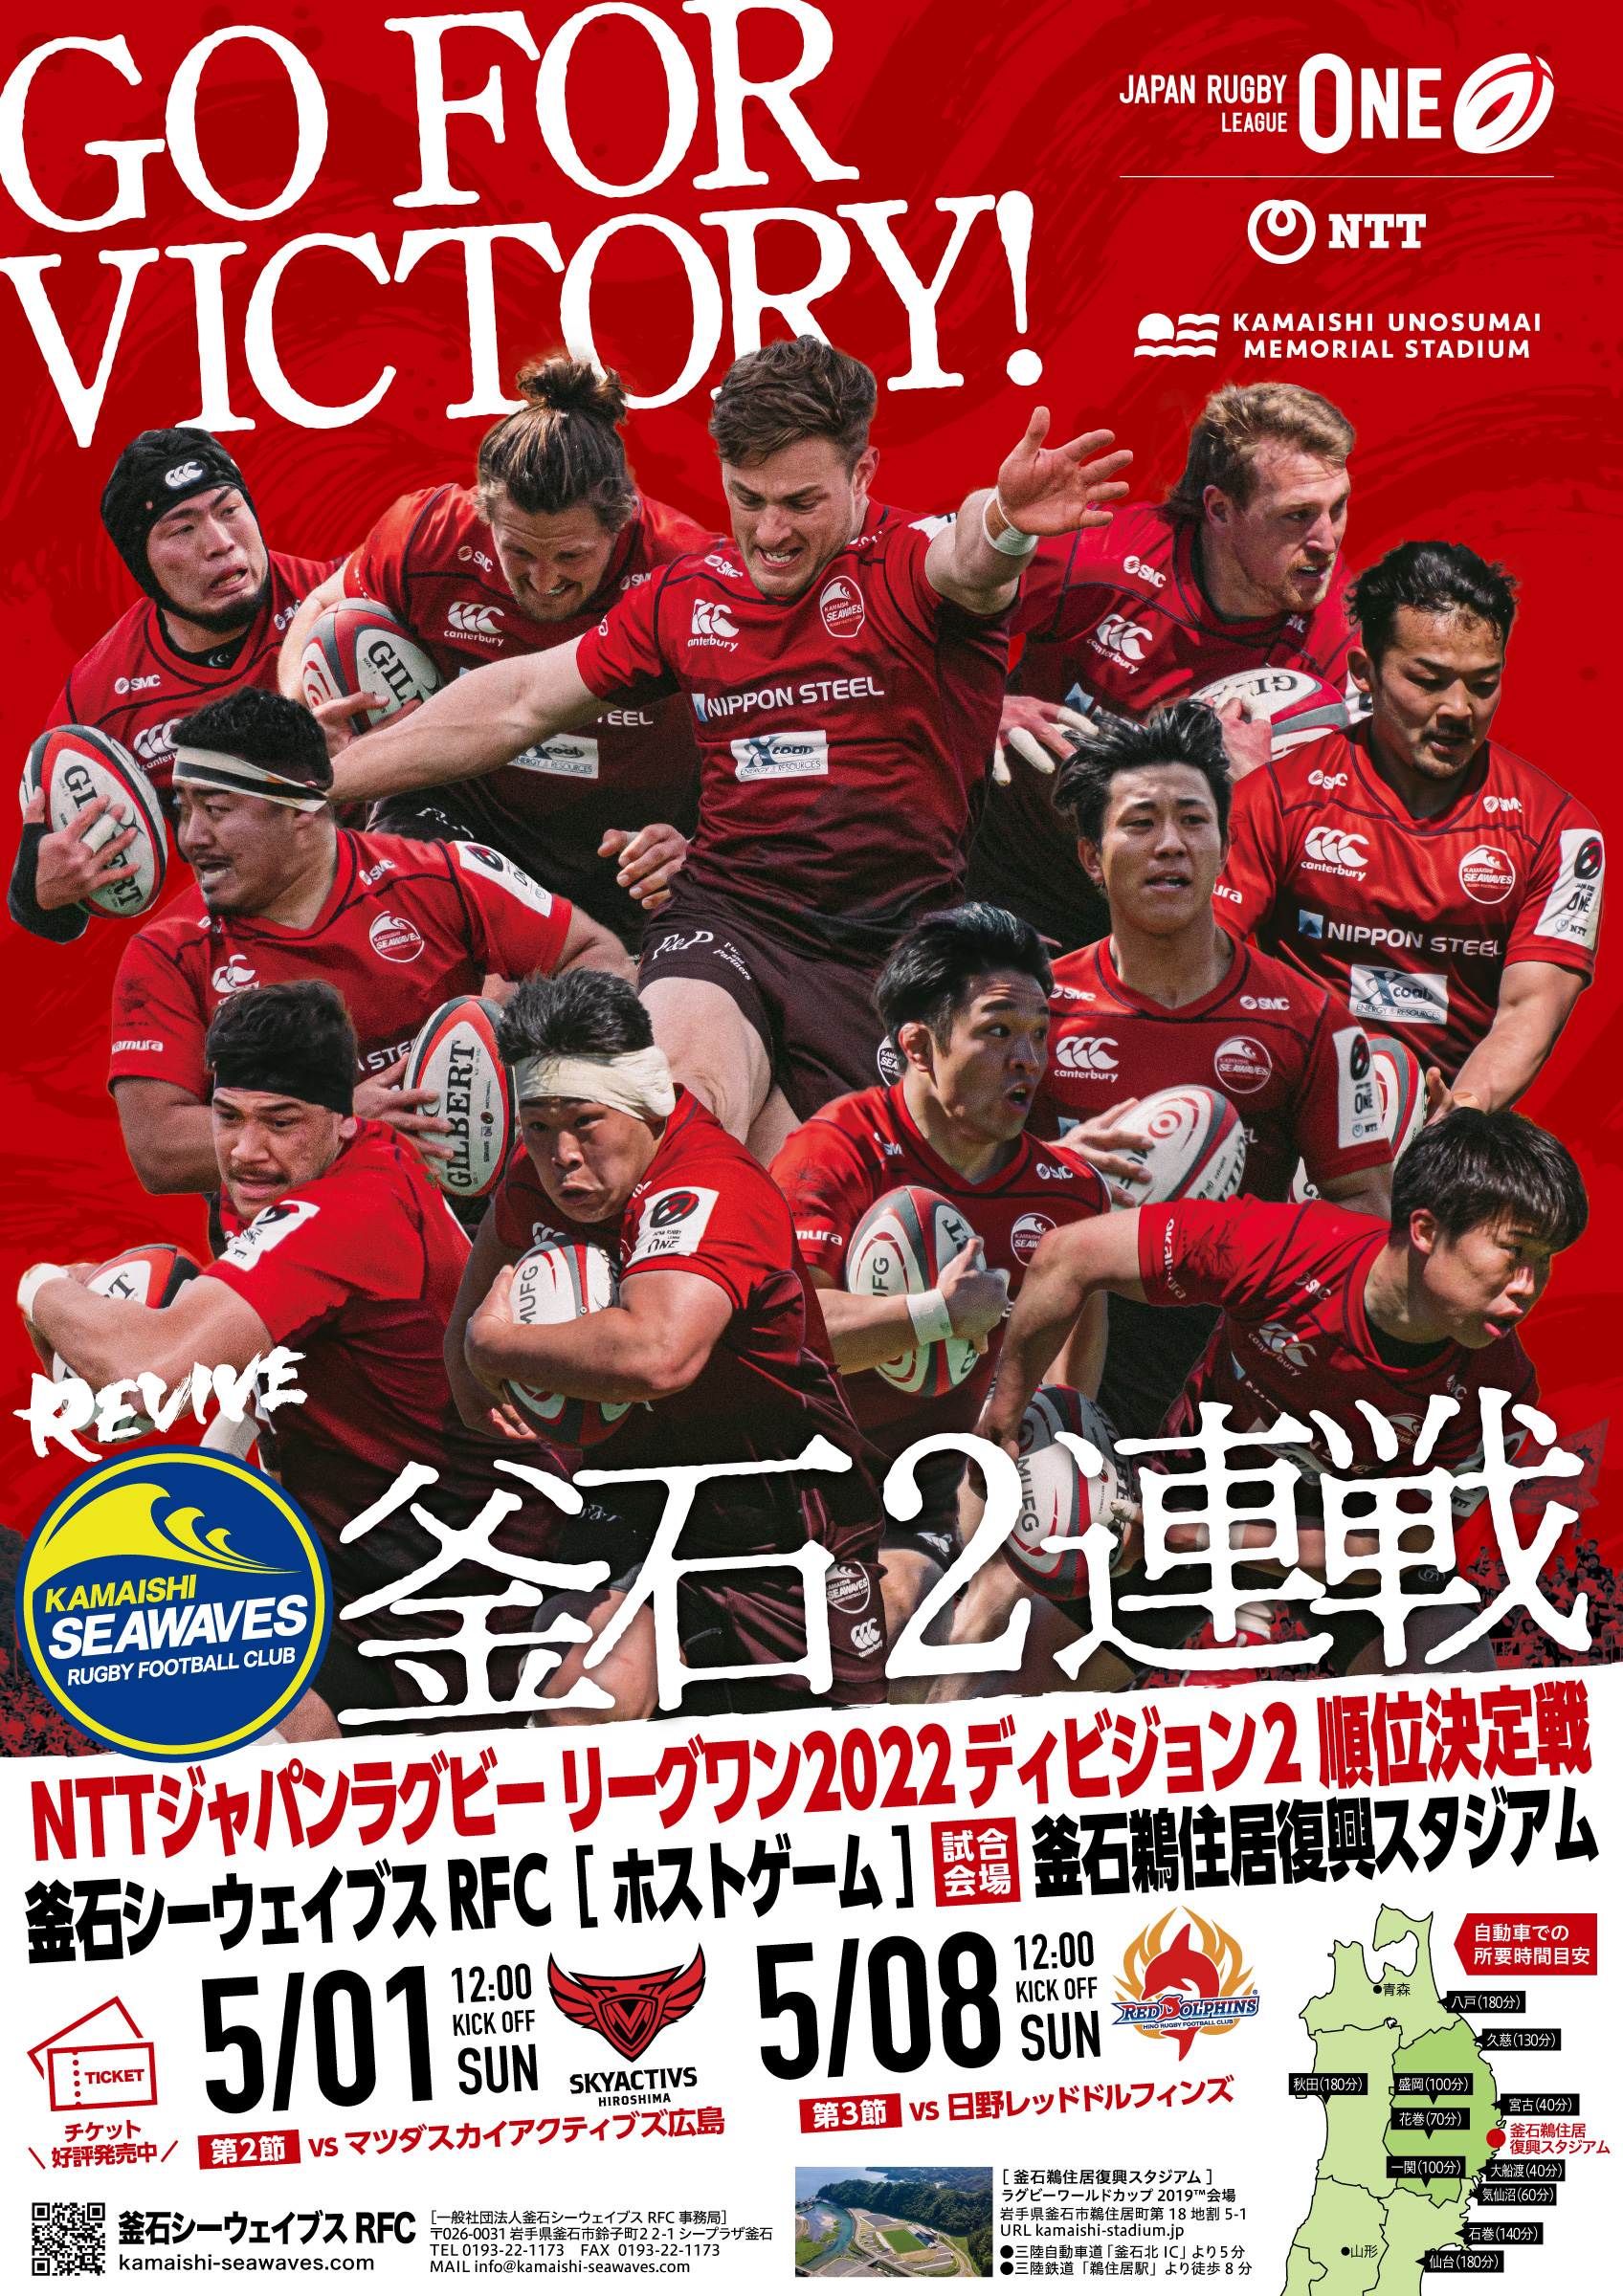 NTTジャパンラグビー リーグワン2022 ディビジョン2 順位決定戦 釜石2連戦の特設ページを公開のお知らせ